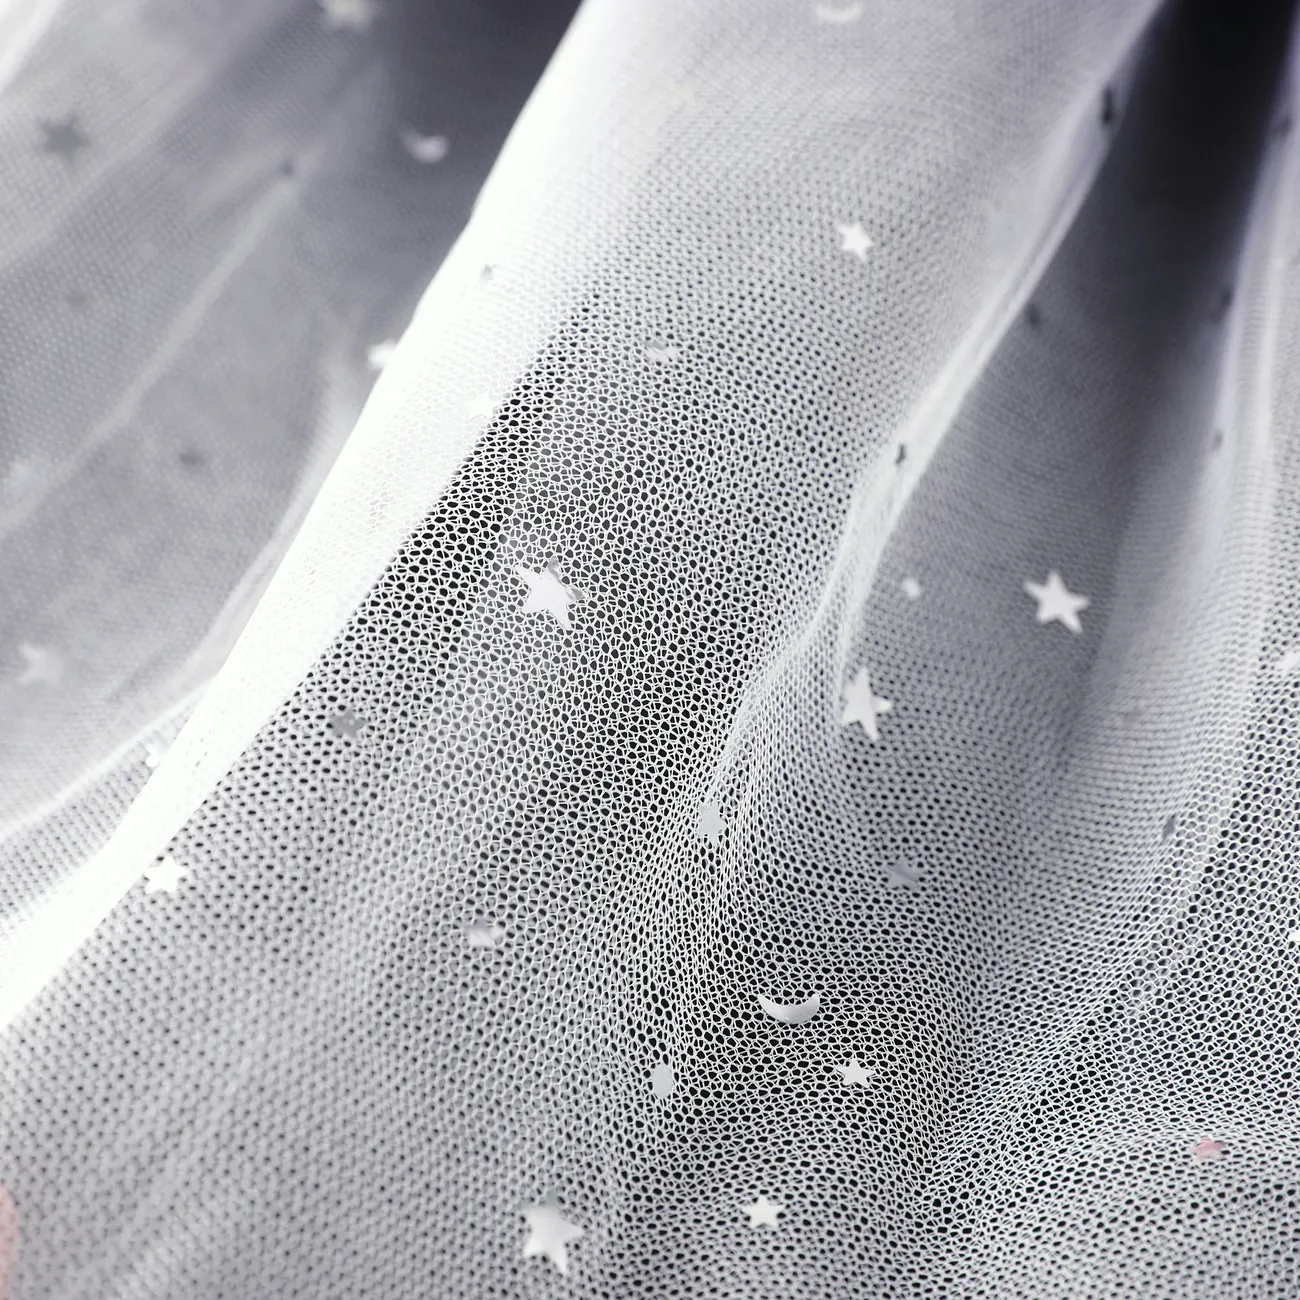 Sweet Gradual Change Flutter Sleeve Dress for Girls， 1 件套， 聚酯纖維材質 黑色 big image 1